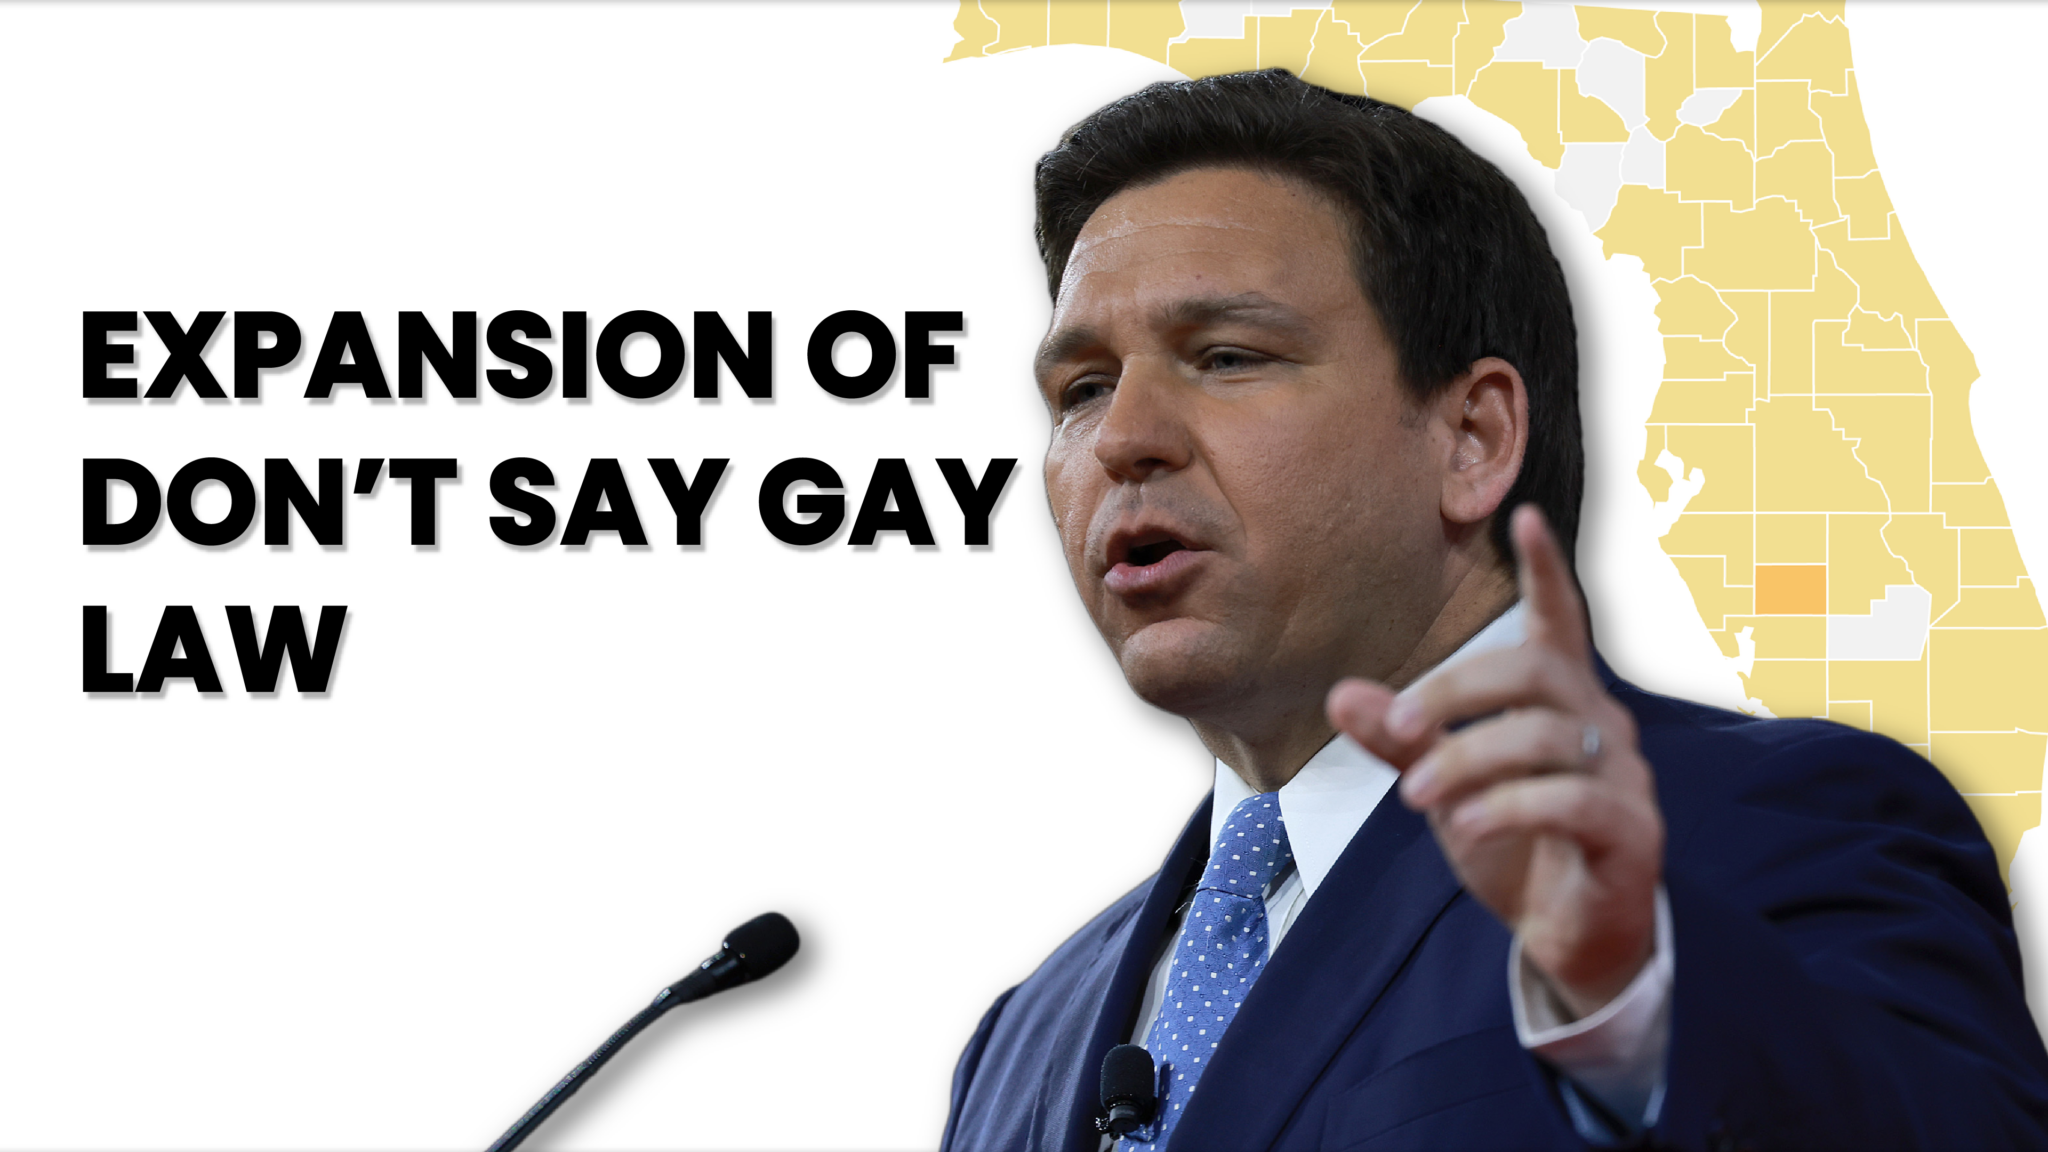 Don't-say-gay-desantis-florida-expansion